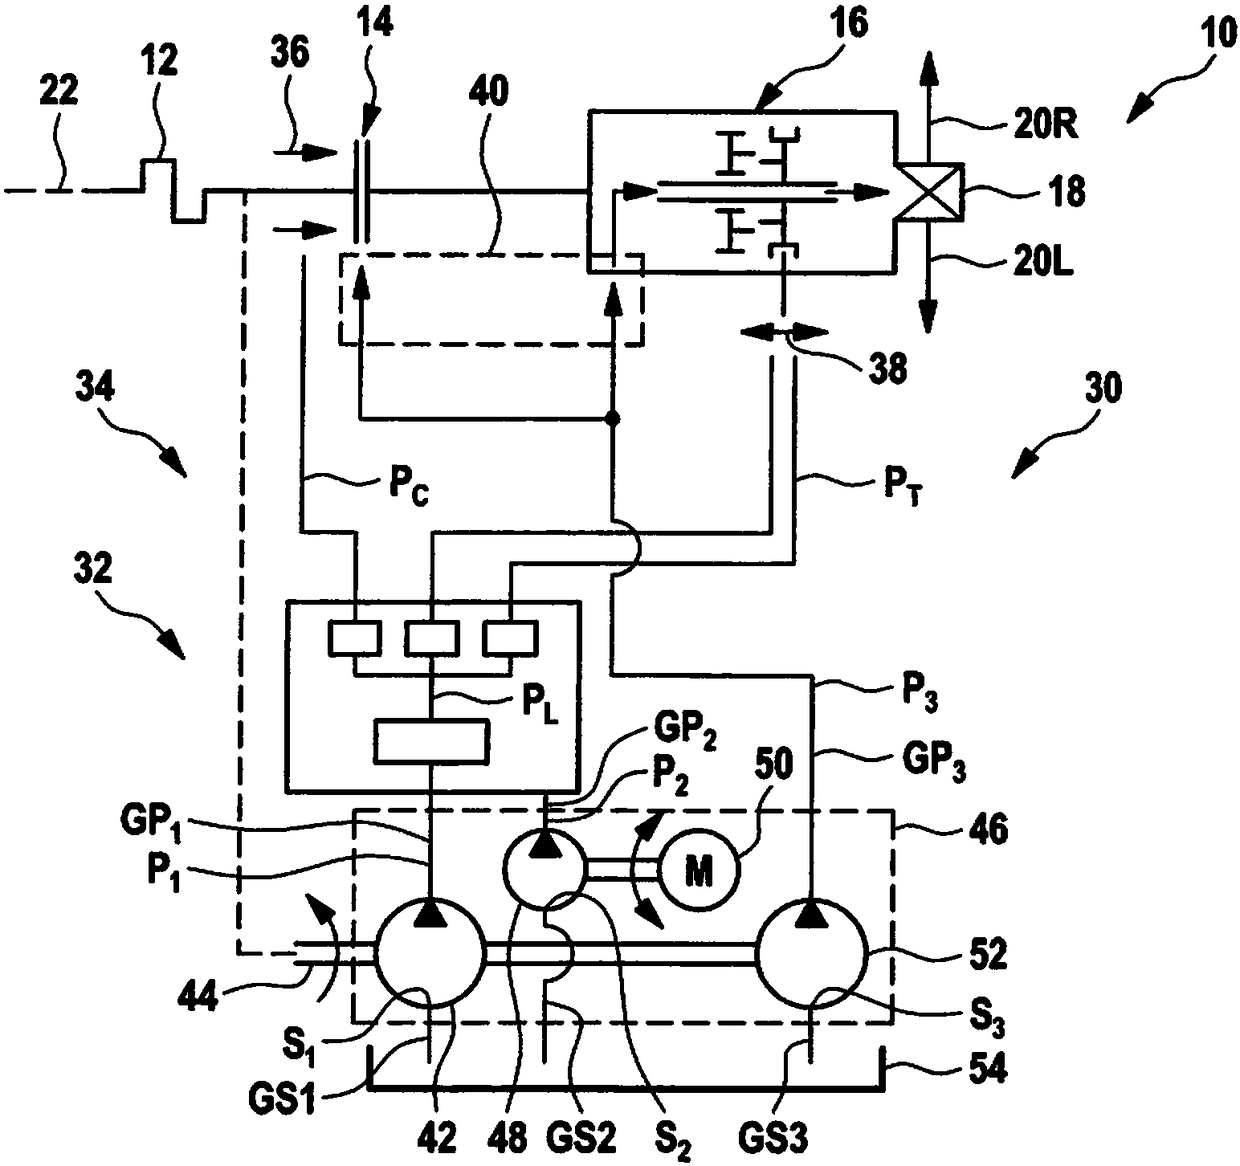 Pump arrangement and hydraulic arrangement for motor vehicle drive train